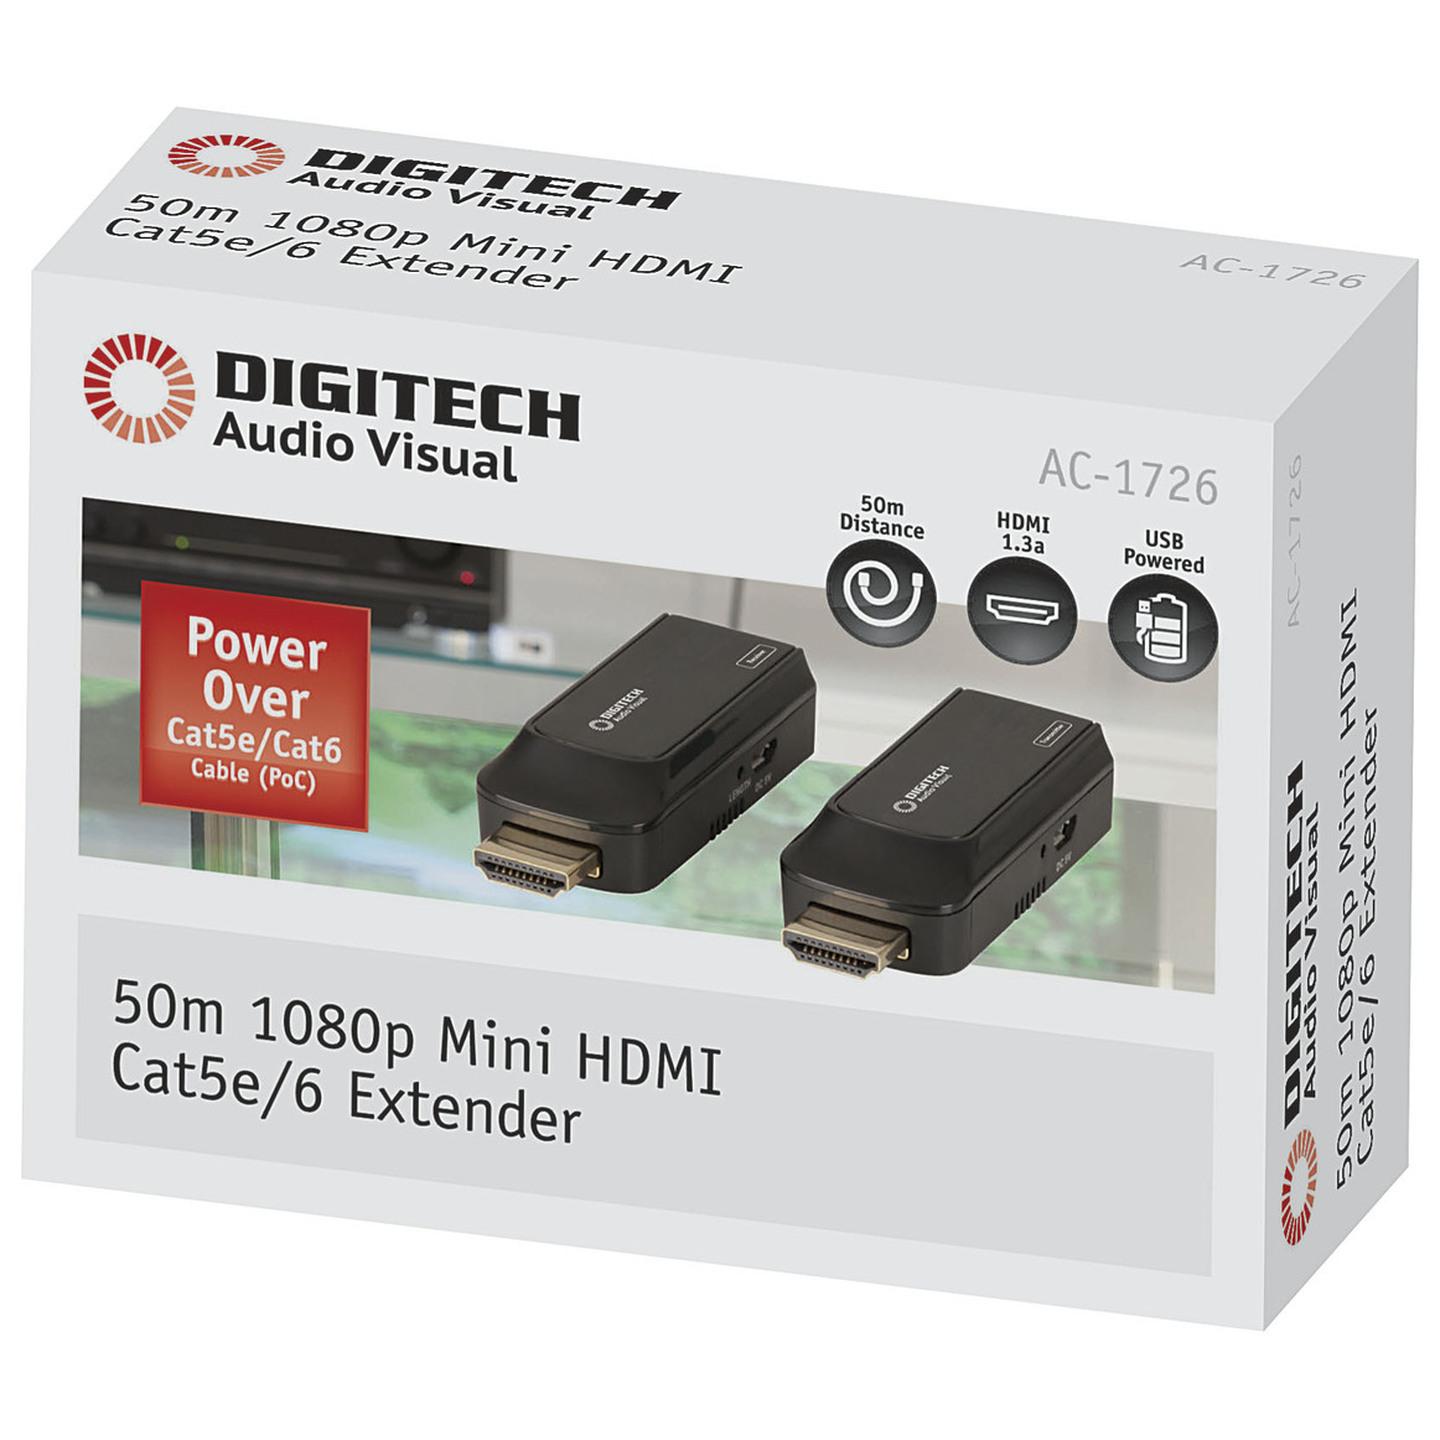 Digitech 50m 1080p Mini HDMI Cat5e/6 Extender